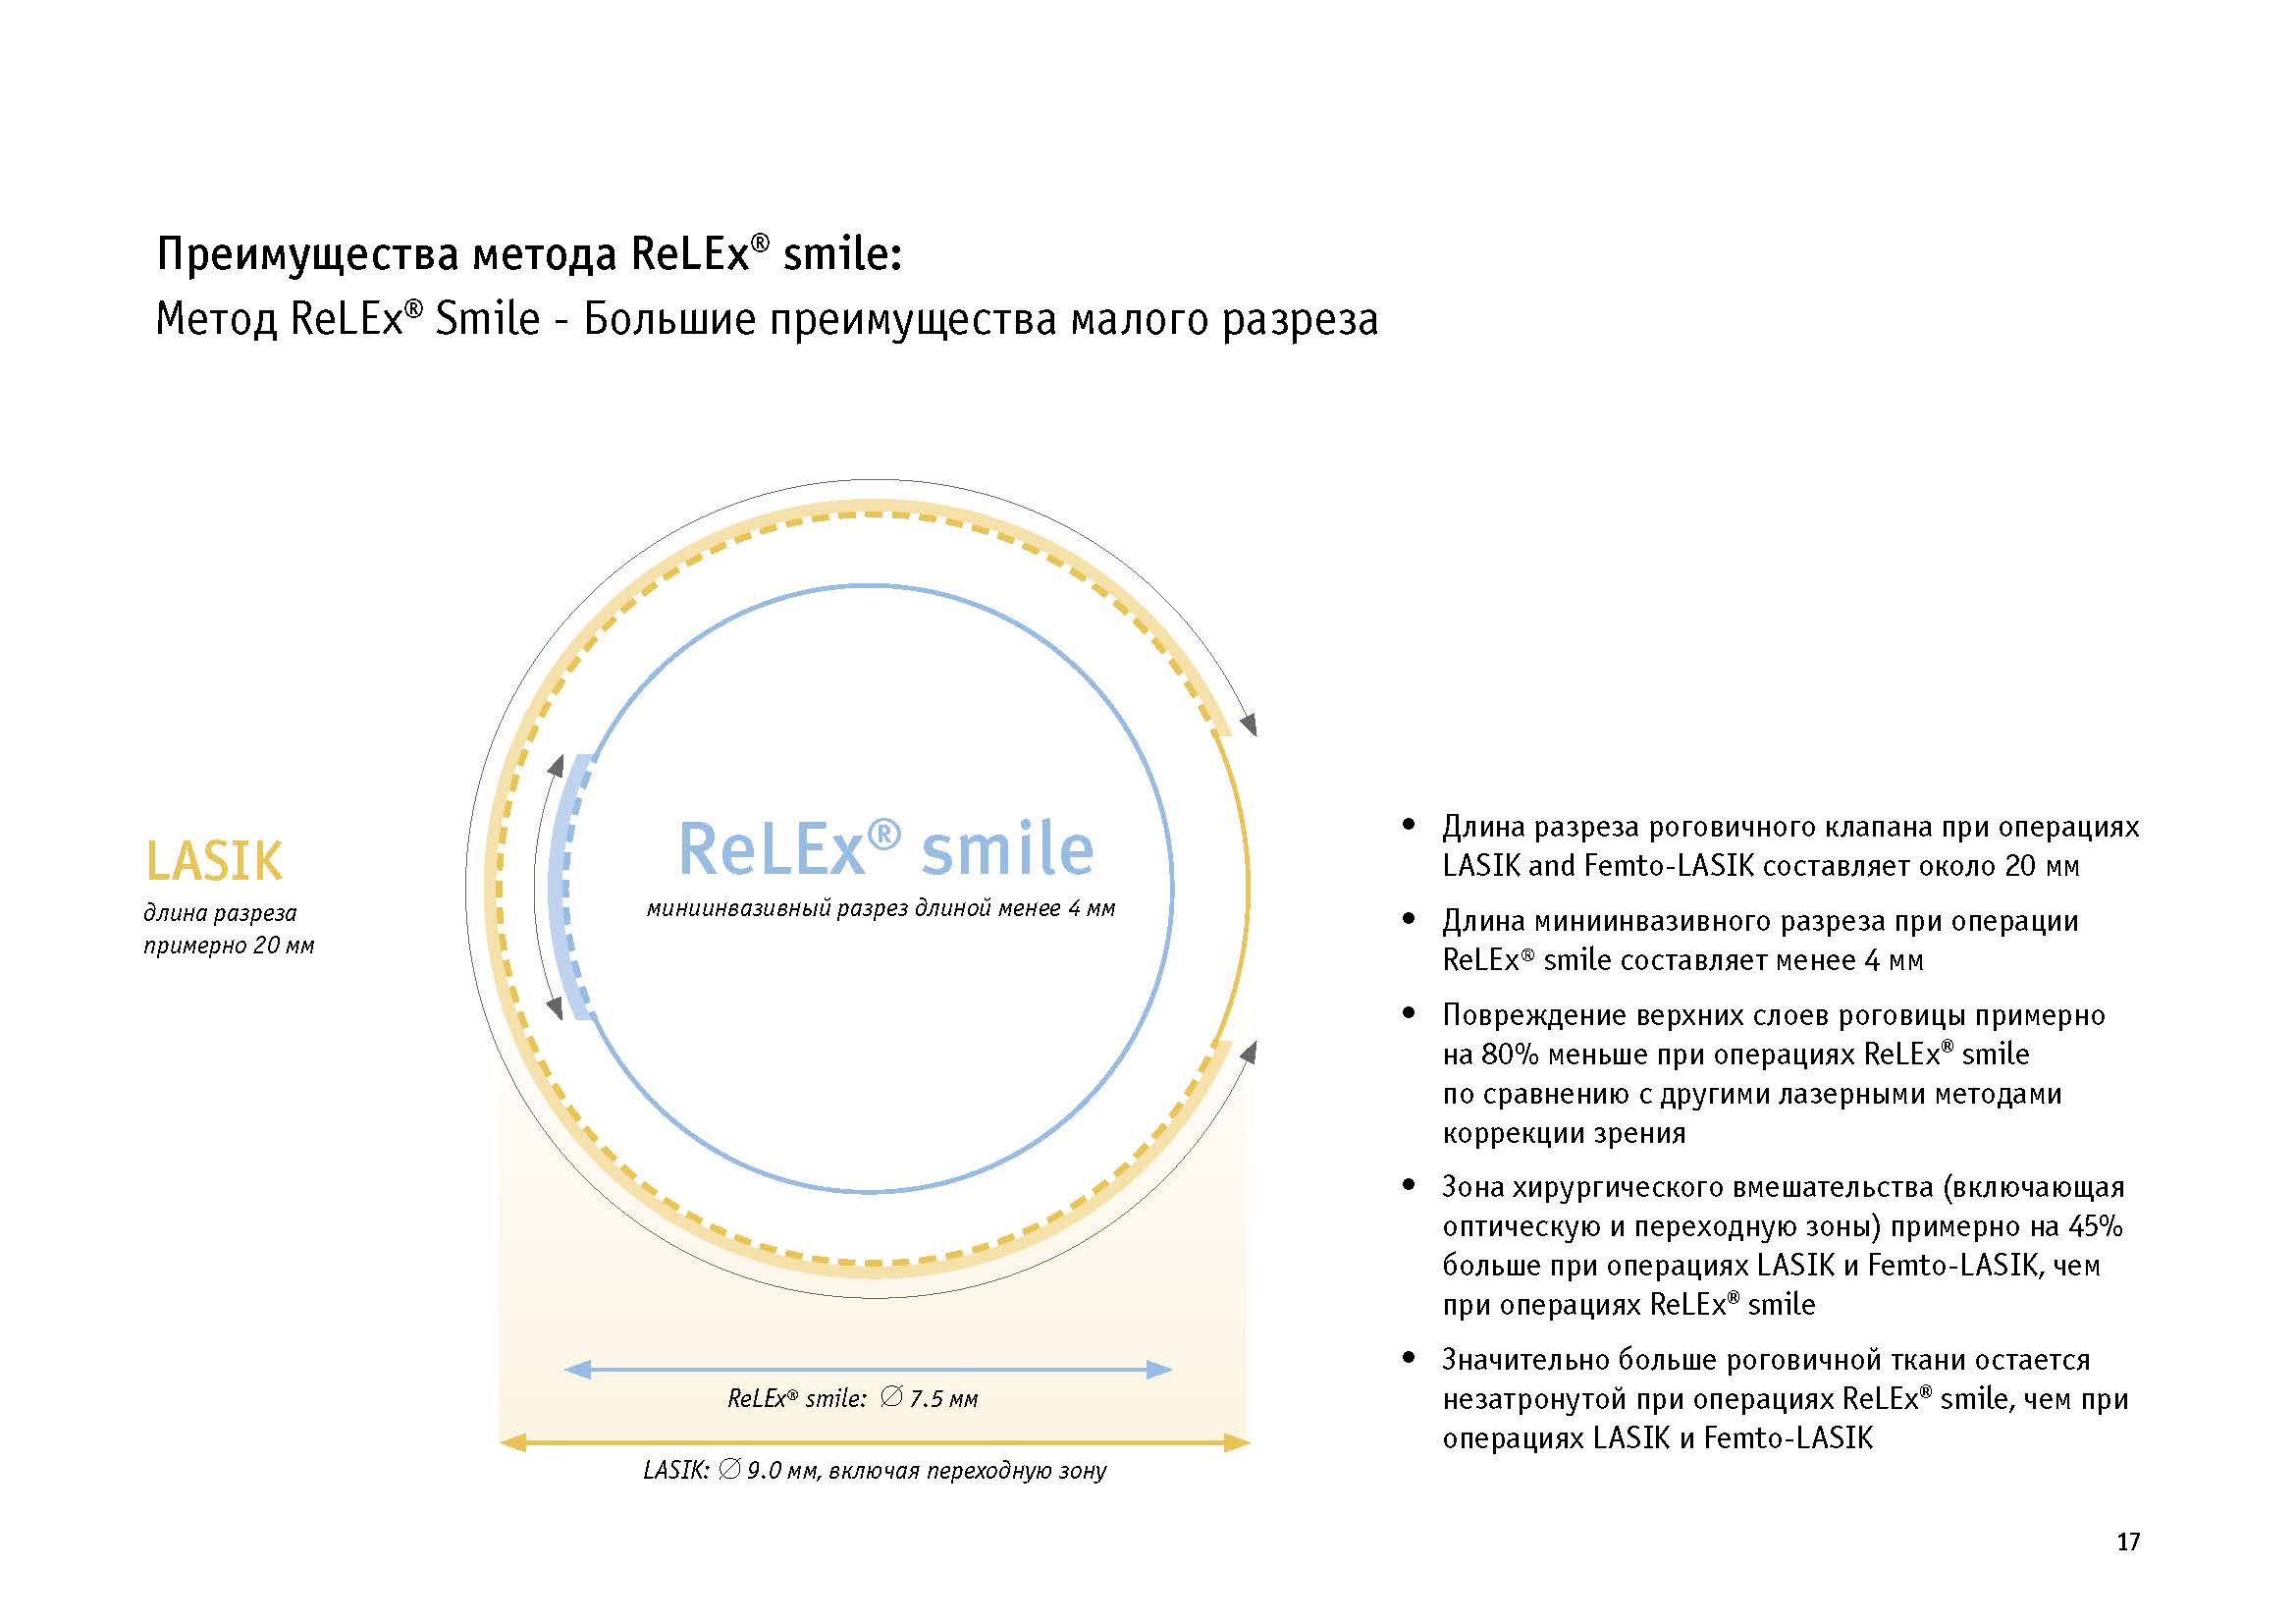 Коррекция smile clinicaspectr ru. RELEX smile лазерная коррекция зрения. Технология smile коррекция зрения. Метод RELEX smile. Лазерная коррекция методом smile.